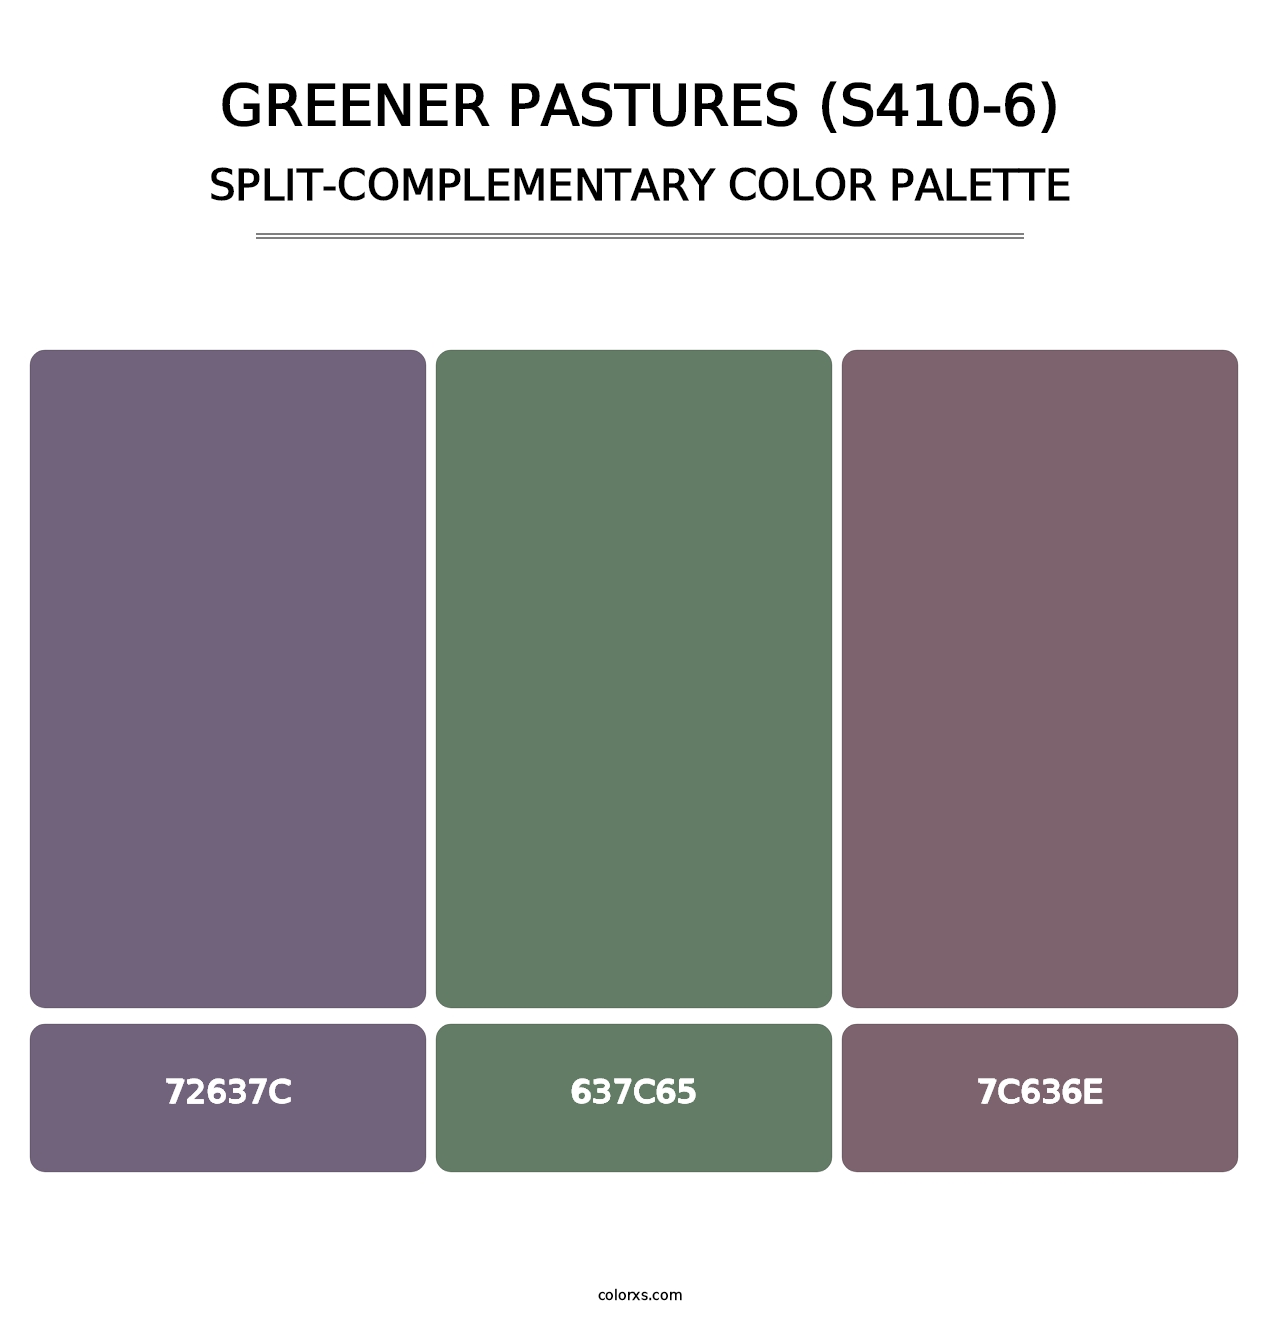 Greener Pastures (S410-6) - Split-Complementary Color Palette